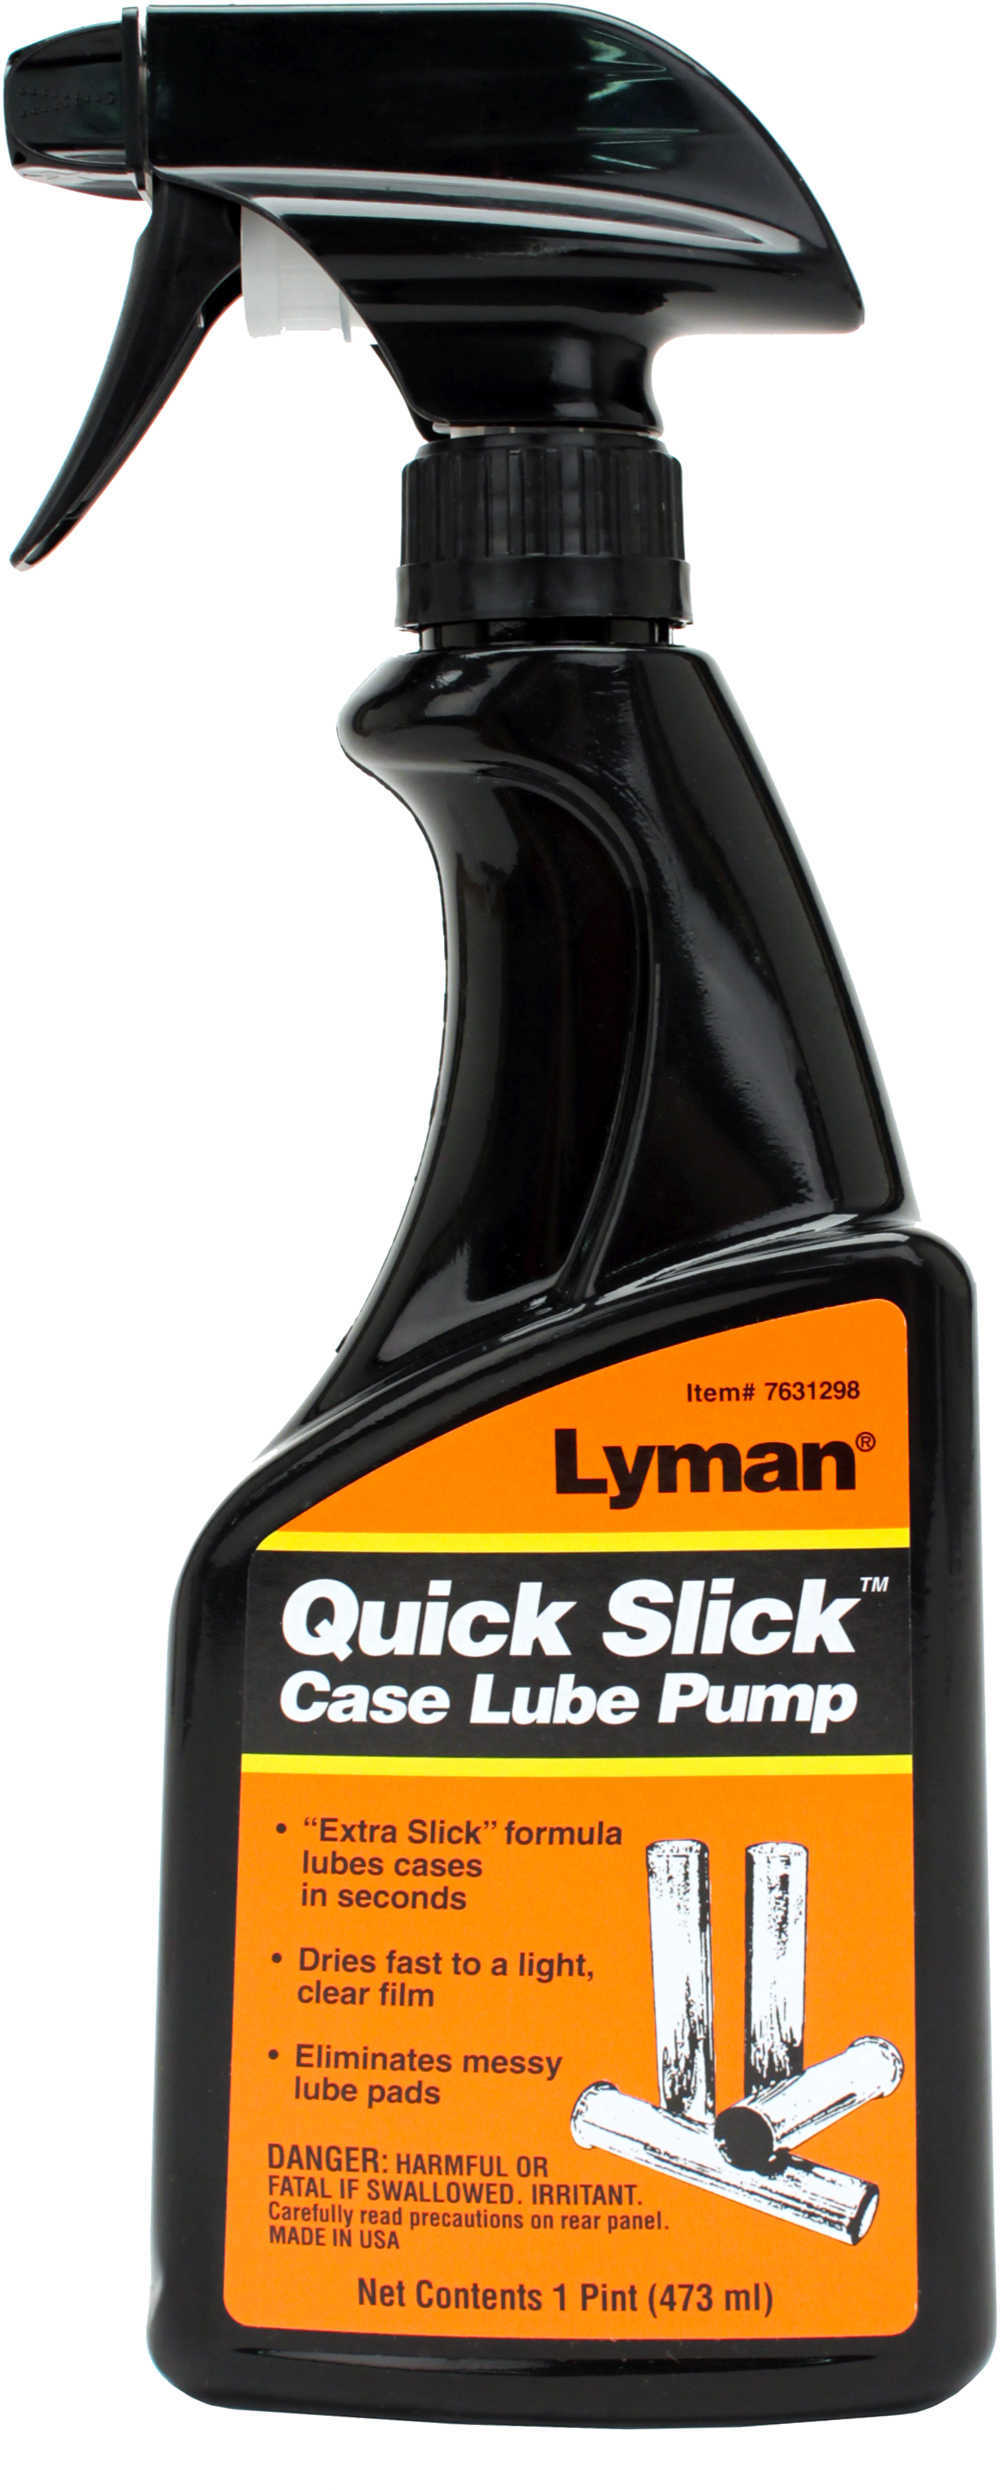 LYM Quick Slick Spray Lube